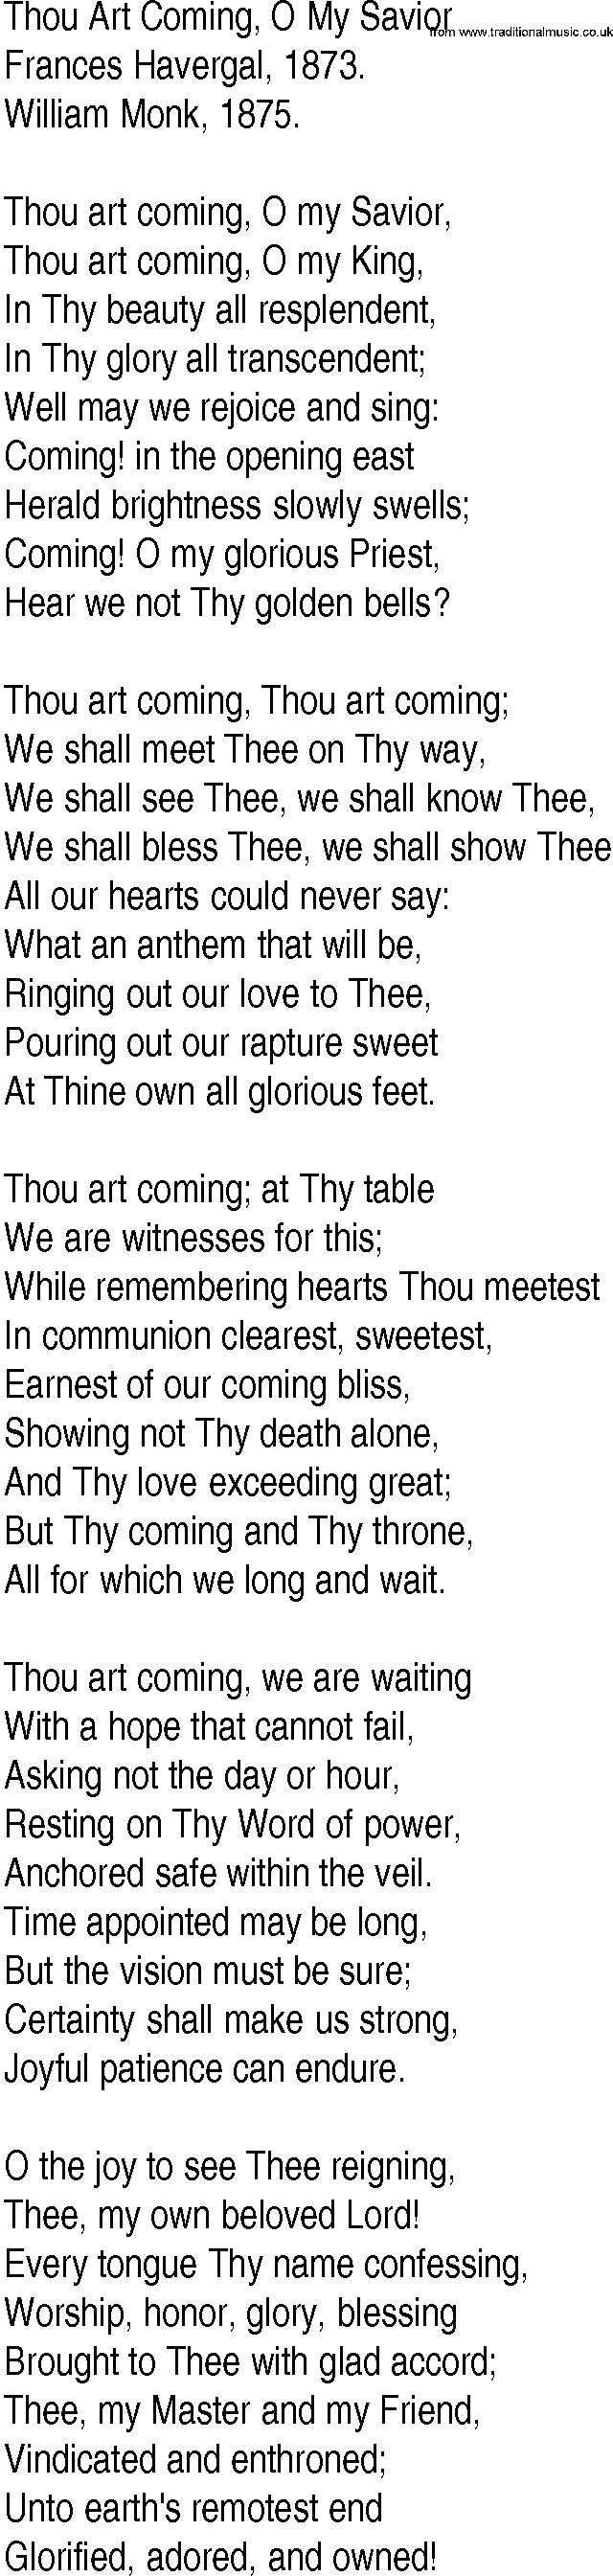 Hymn and Gospel Song: Thou Art Coming, O My Savior by Frances Havergal lyrics